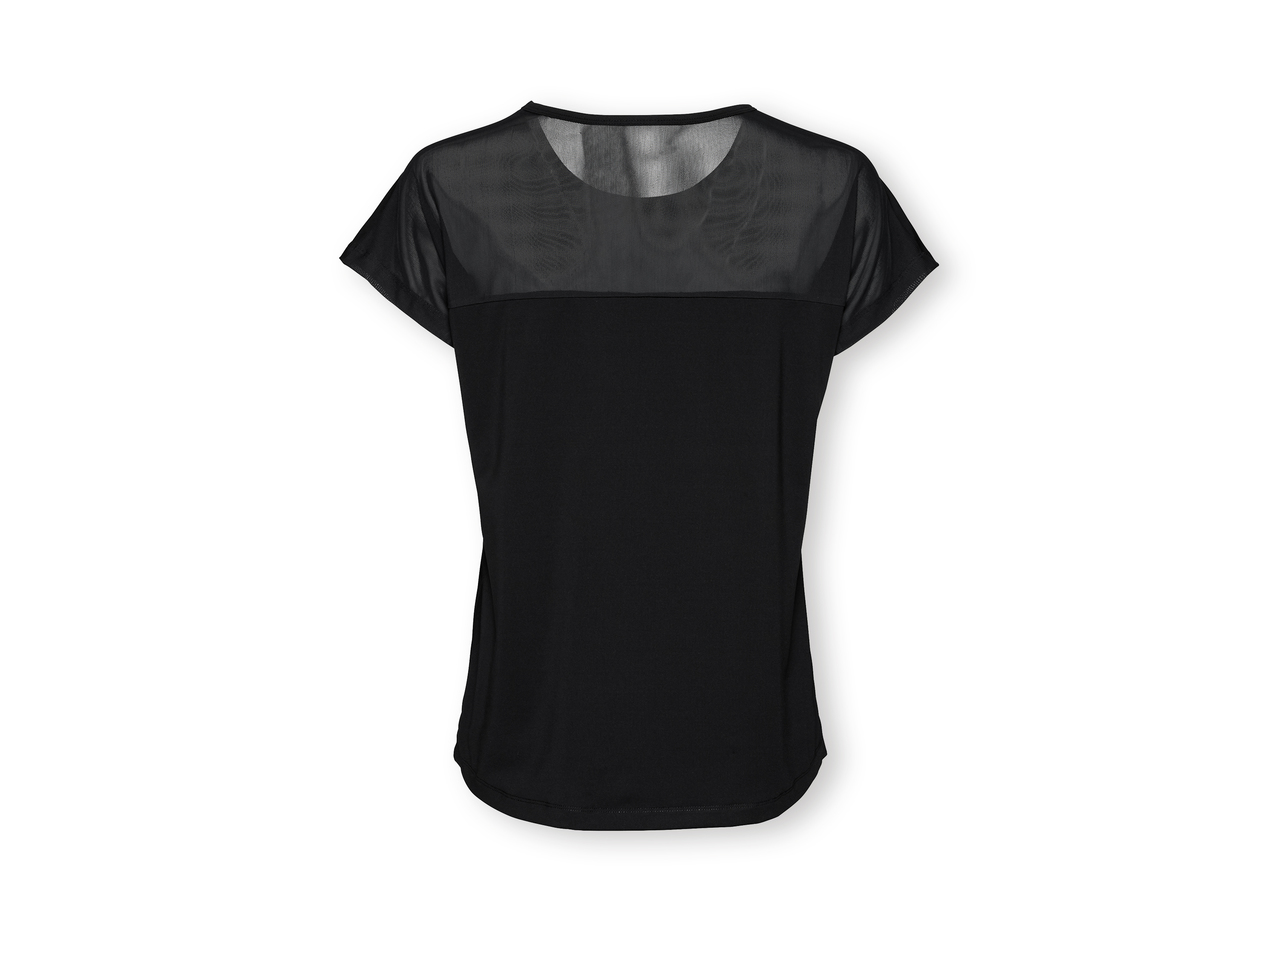 ‘Crivit(R)' Camiseta deportiva de manga corta mujer